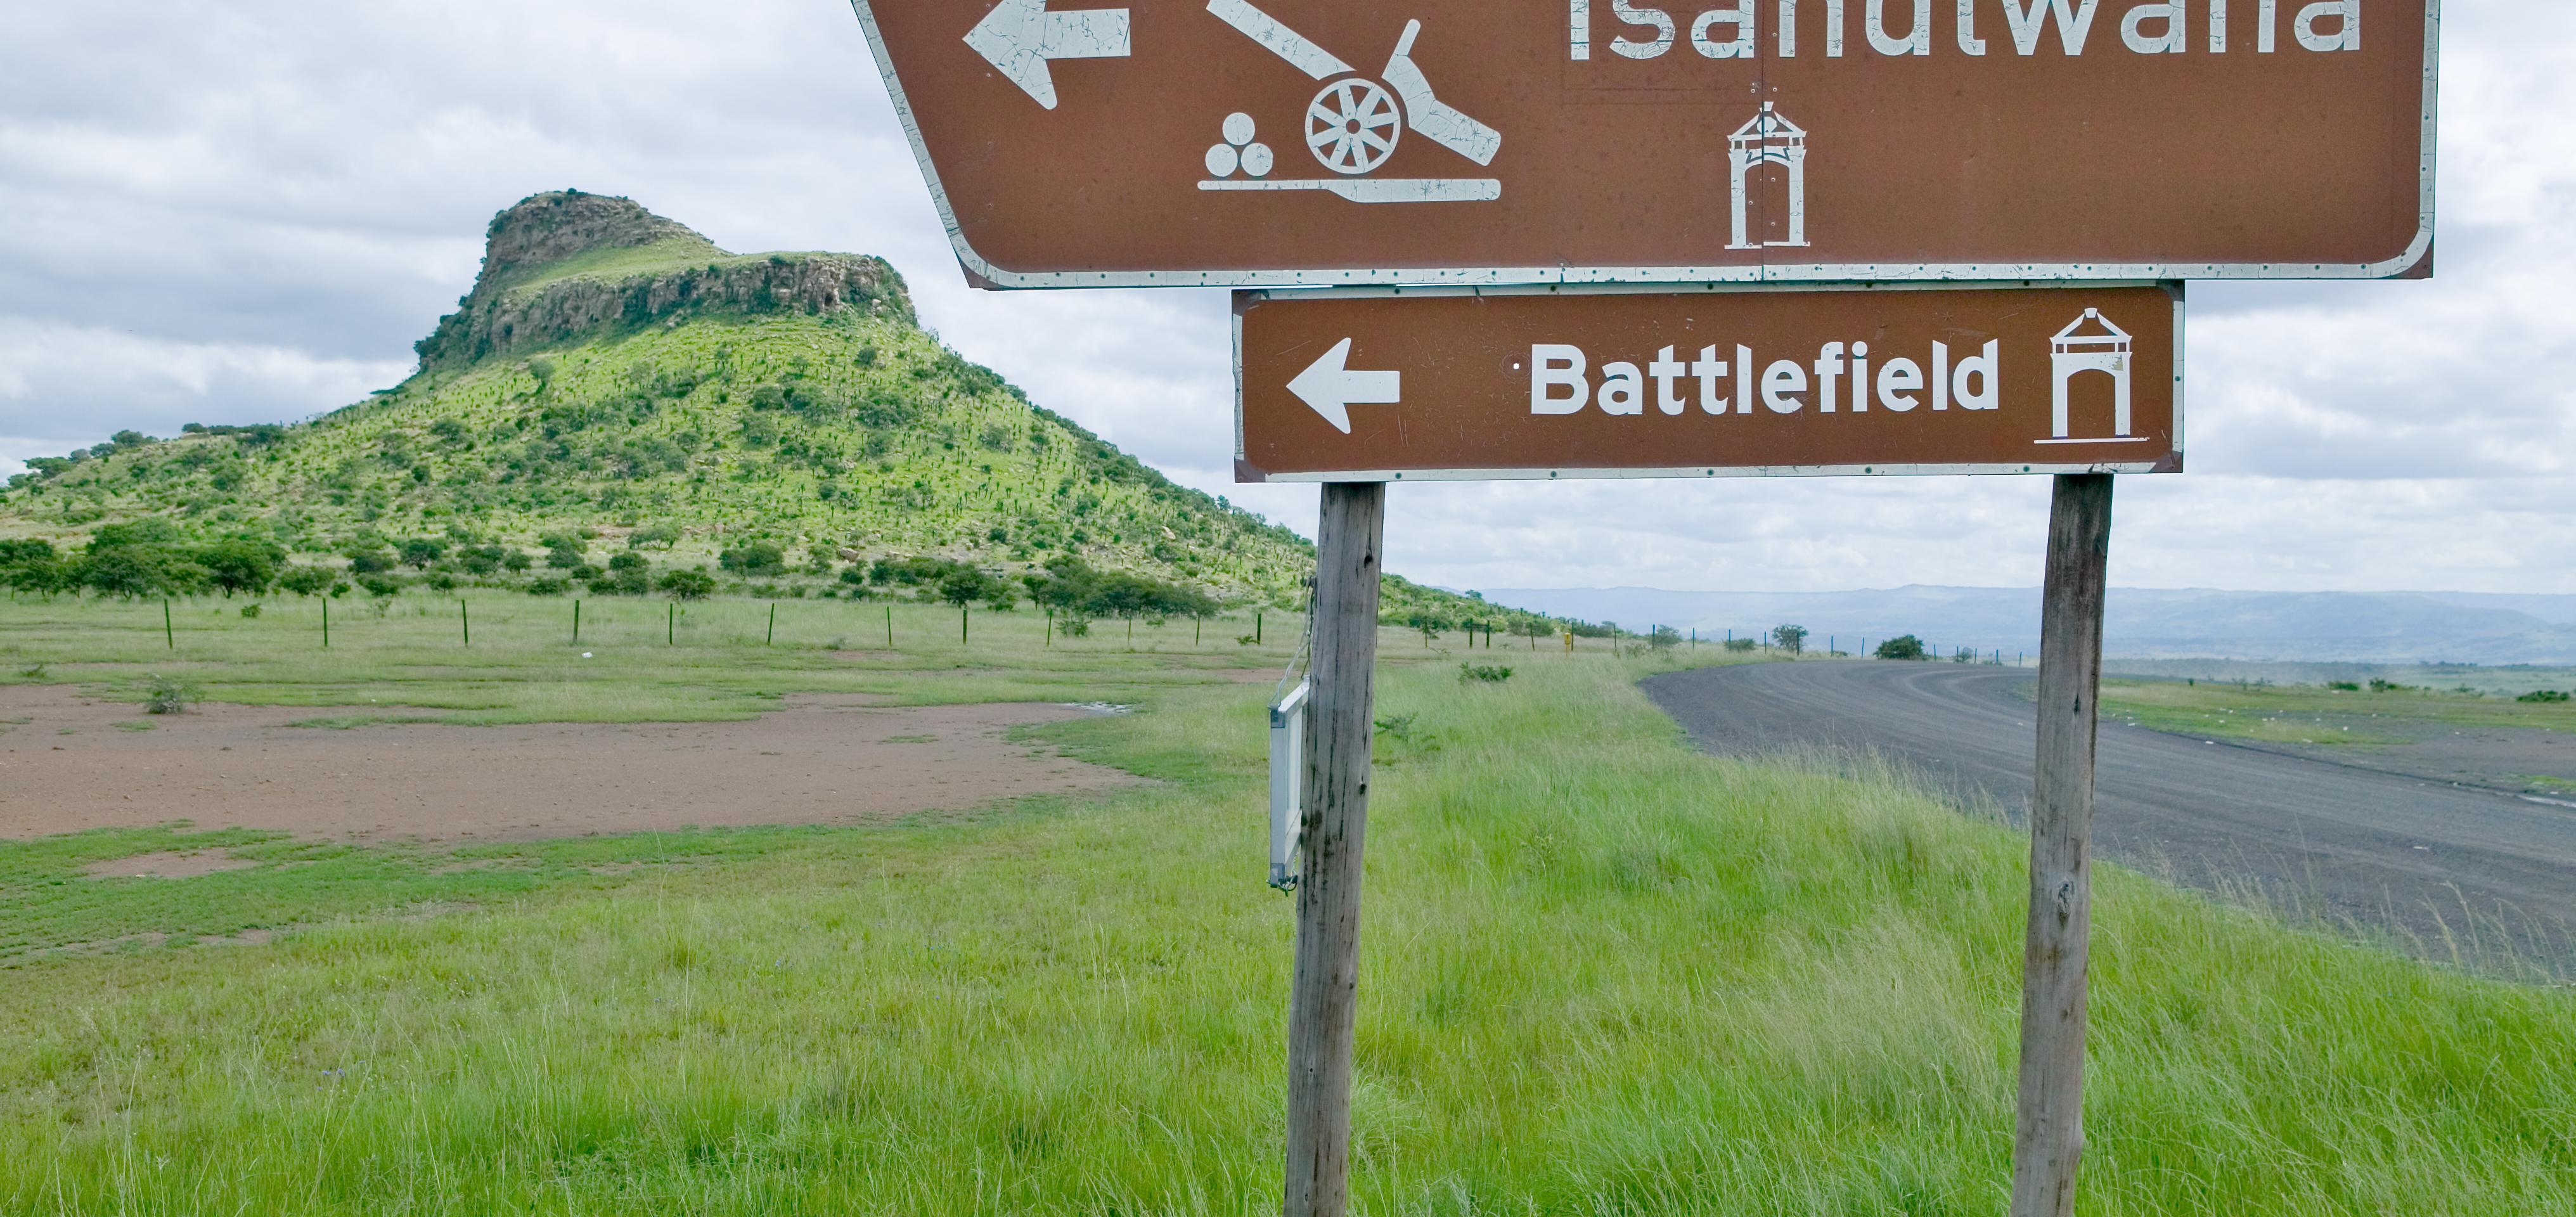 Guided tour of Rorke’s Drift and Isandlwana battlefields